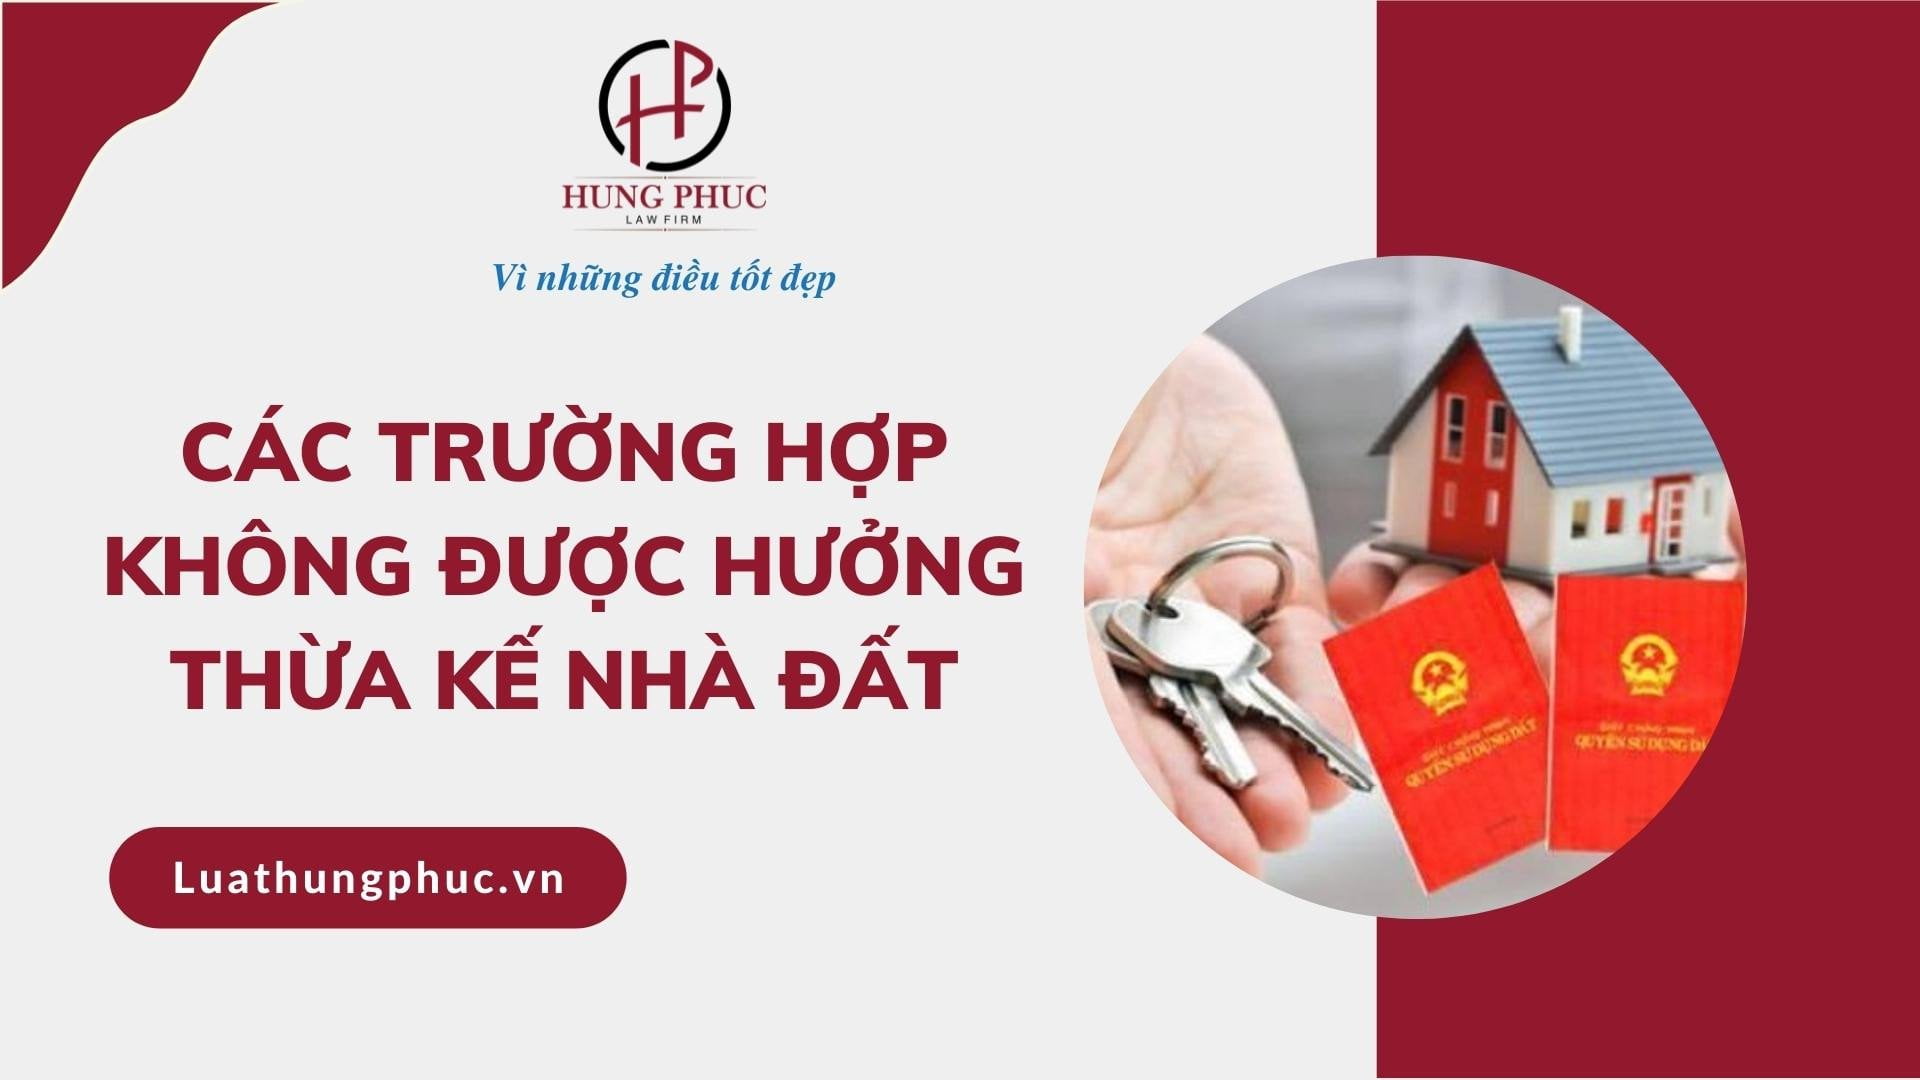 Cac Truong Hop Khong Duoc Huong Thua Ke Nha Dat Lhp